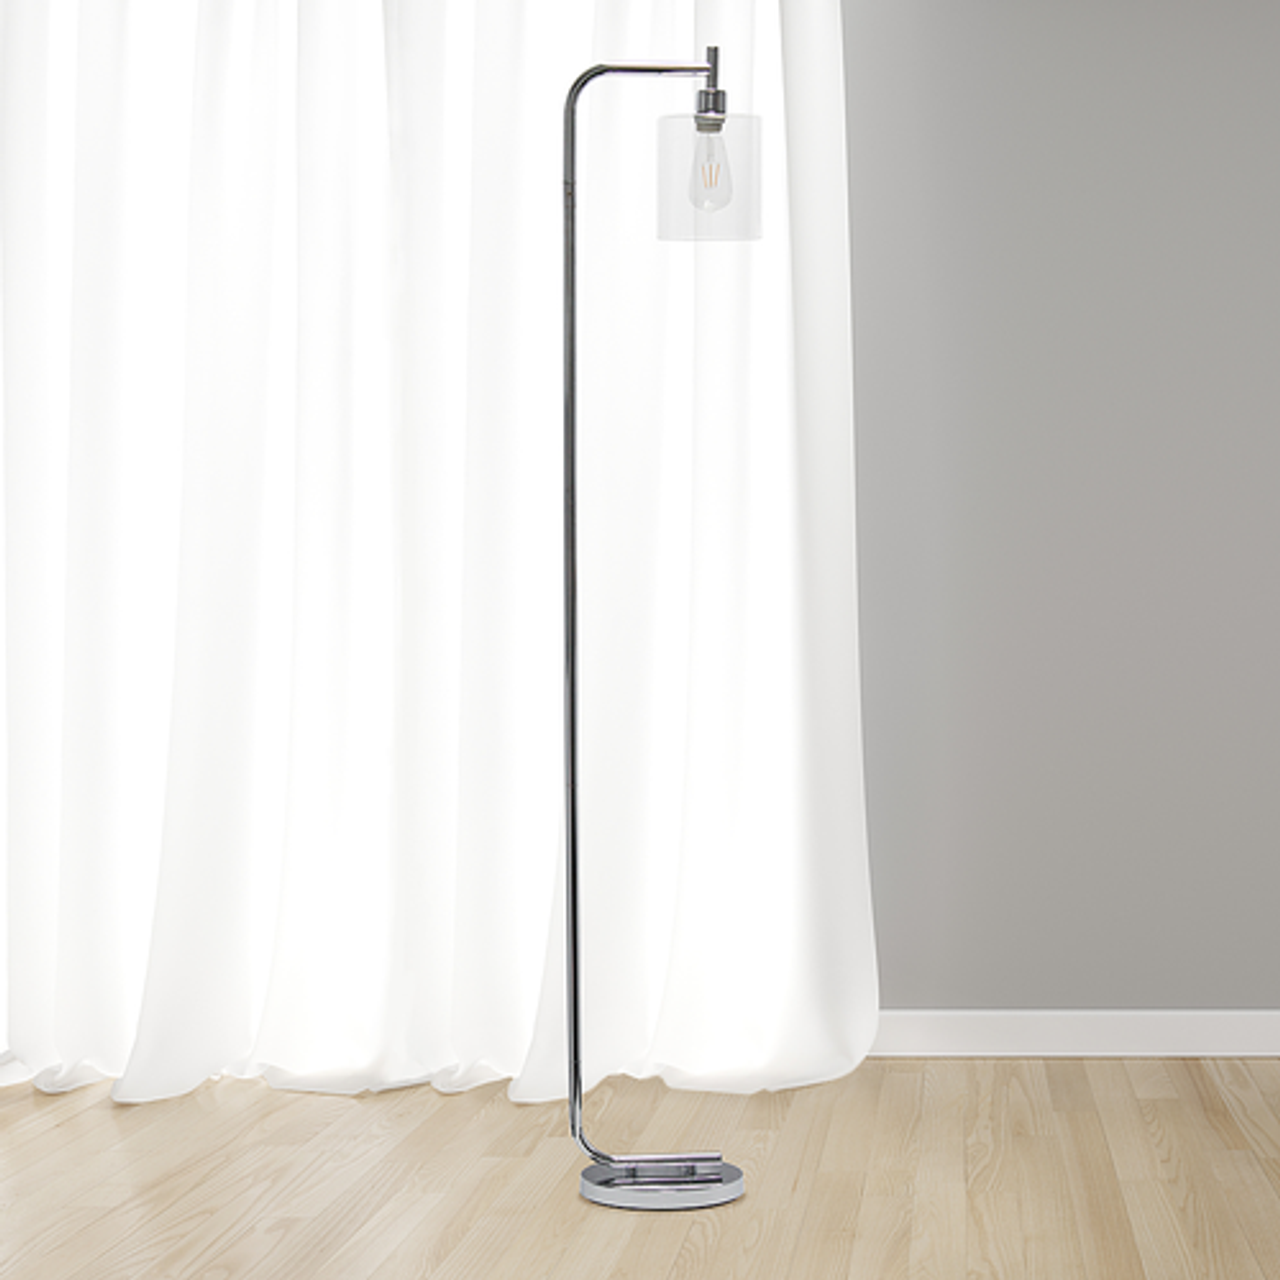 Simple Designs Modern Iron Lantern Floor Lamp with Glass Shade, Chrome - Chrome